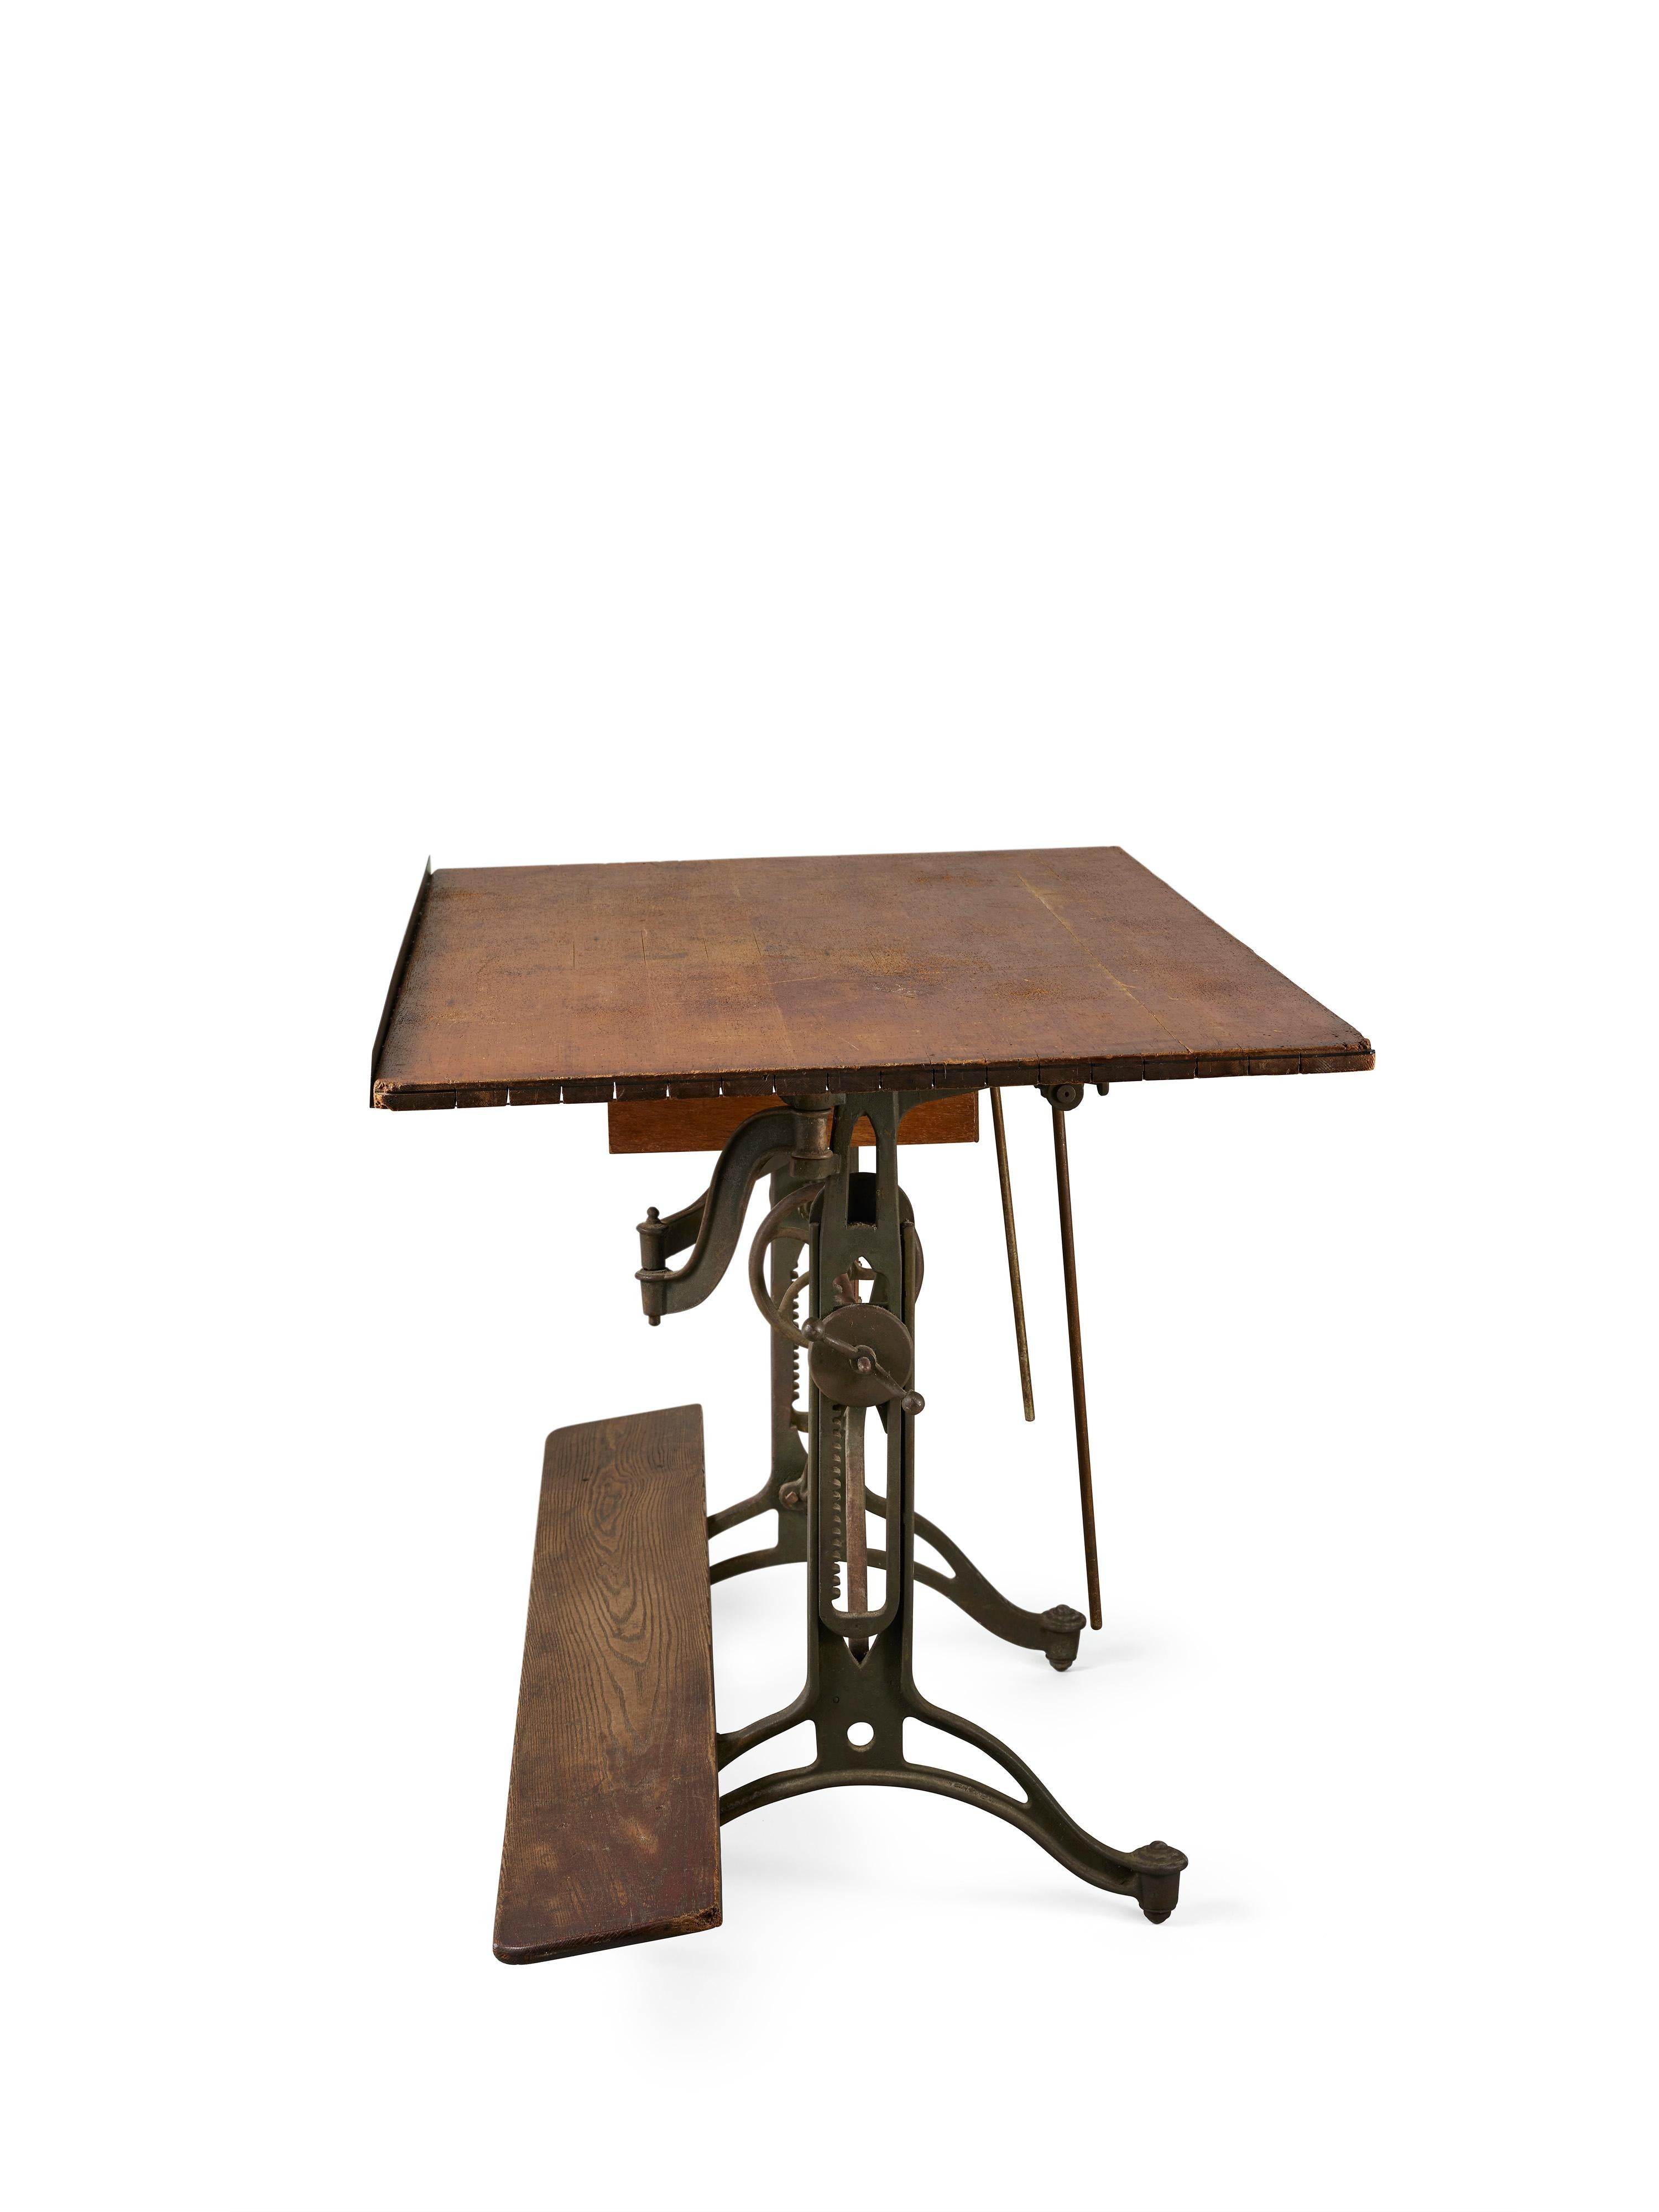 American Original Keuffel and Esser Drafting Table For Sale